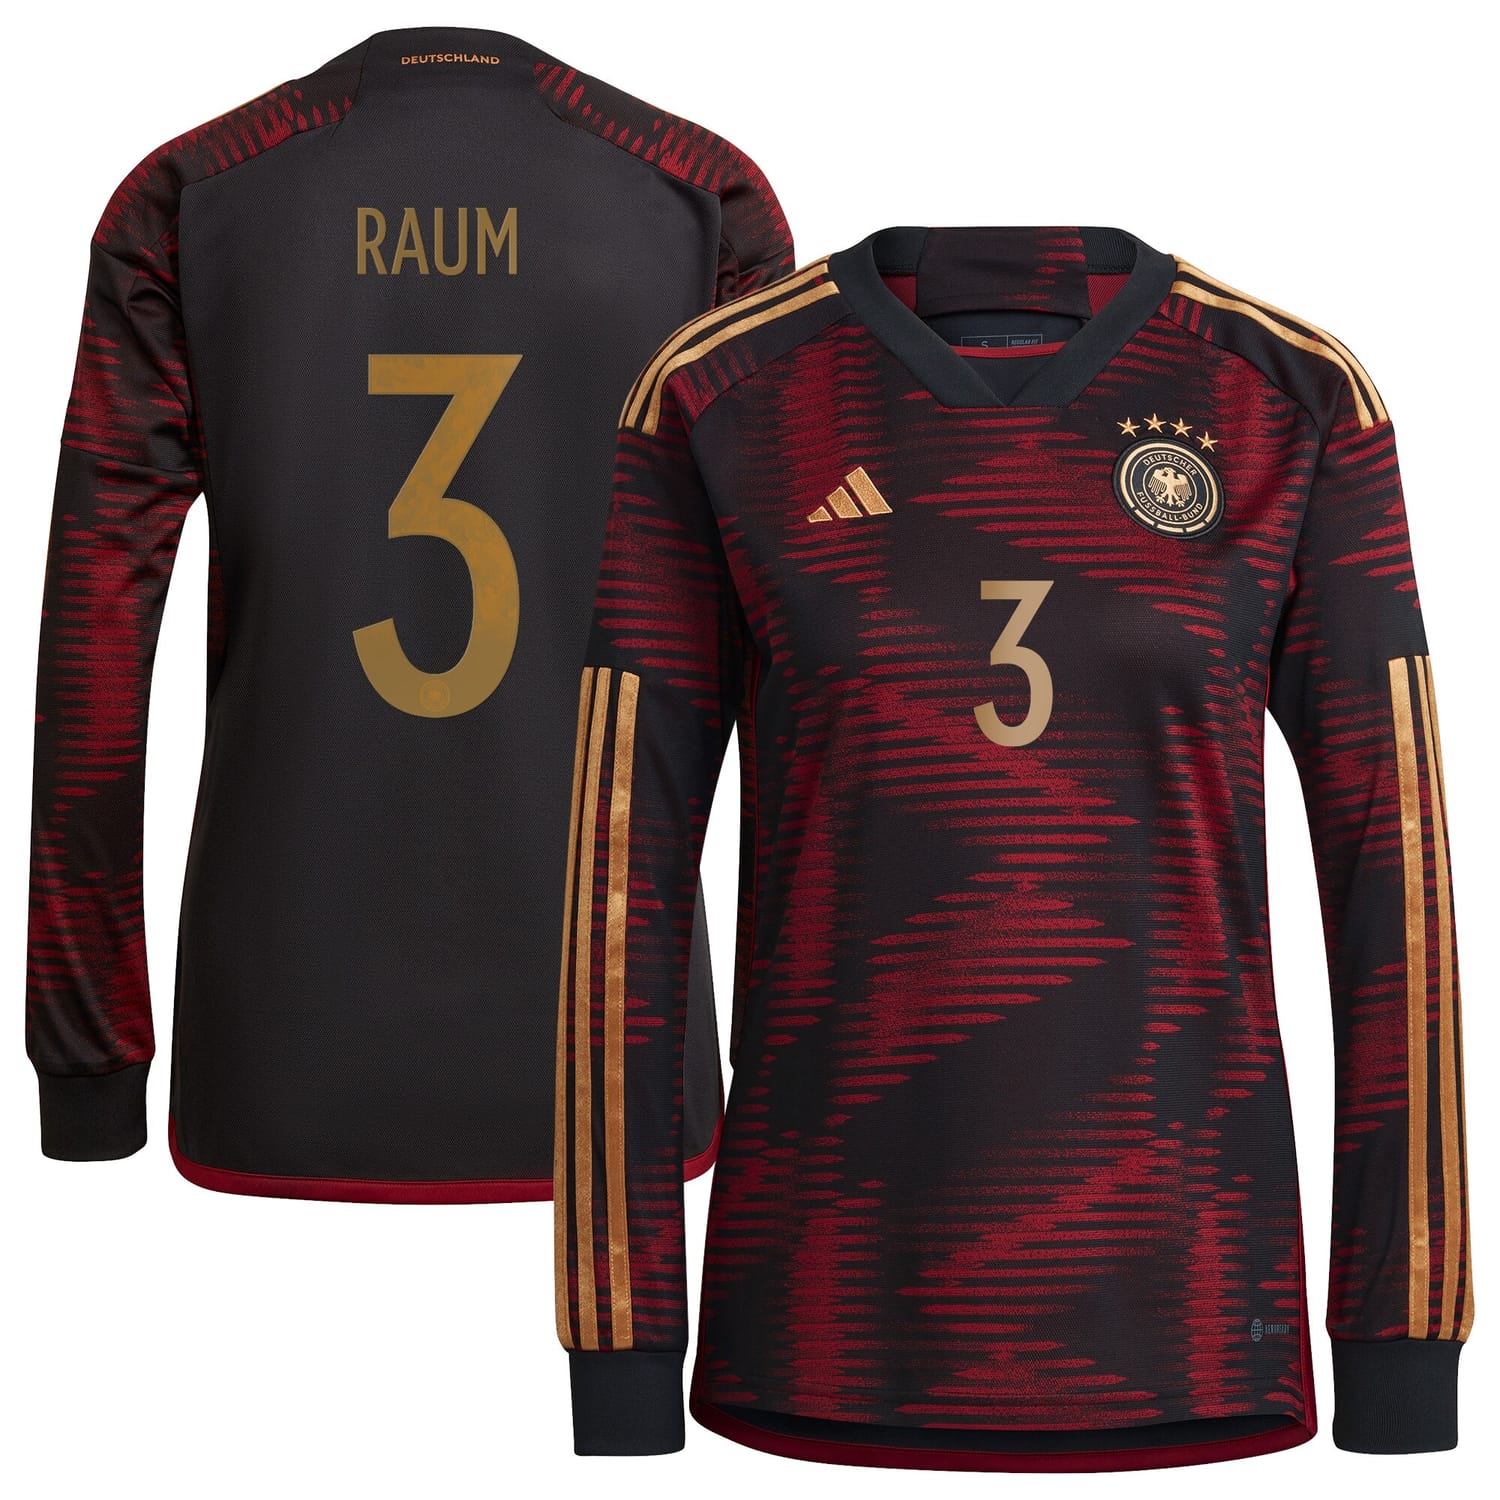 Germany National Team Away Jersey Shirt Long Sleeve player David Raum 3 printing for Women